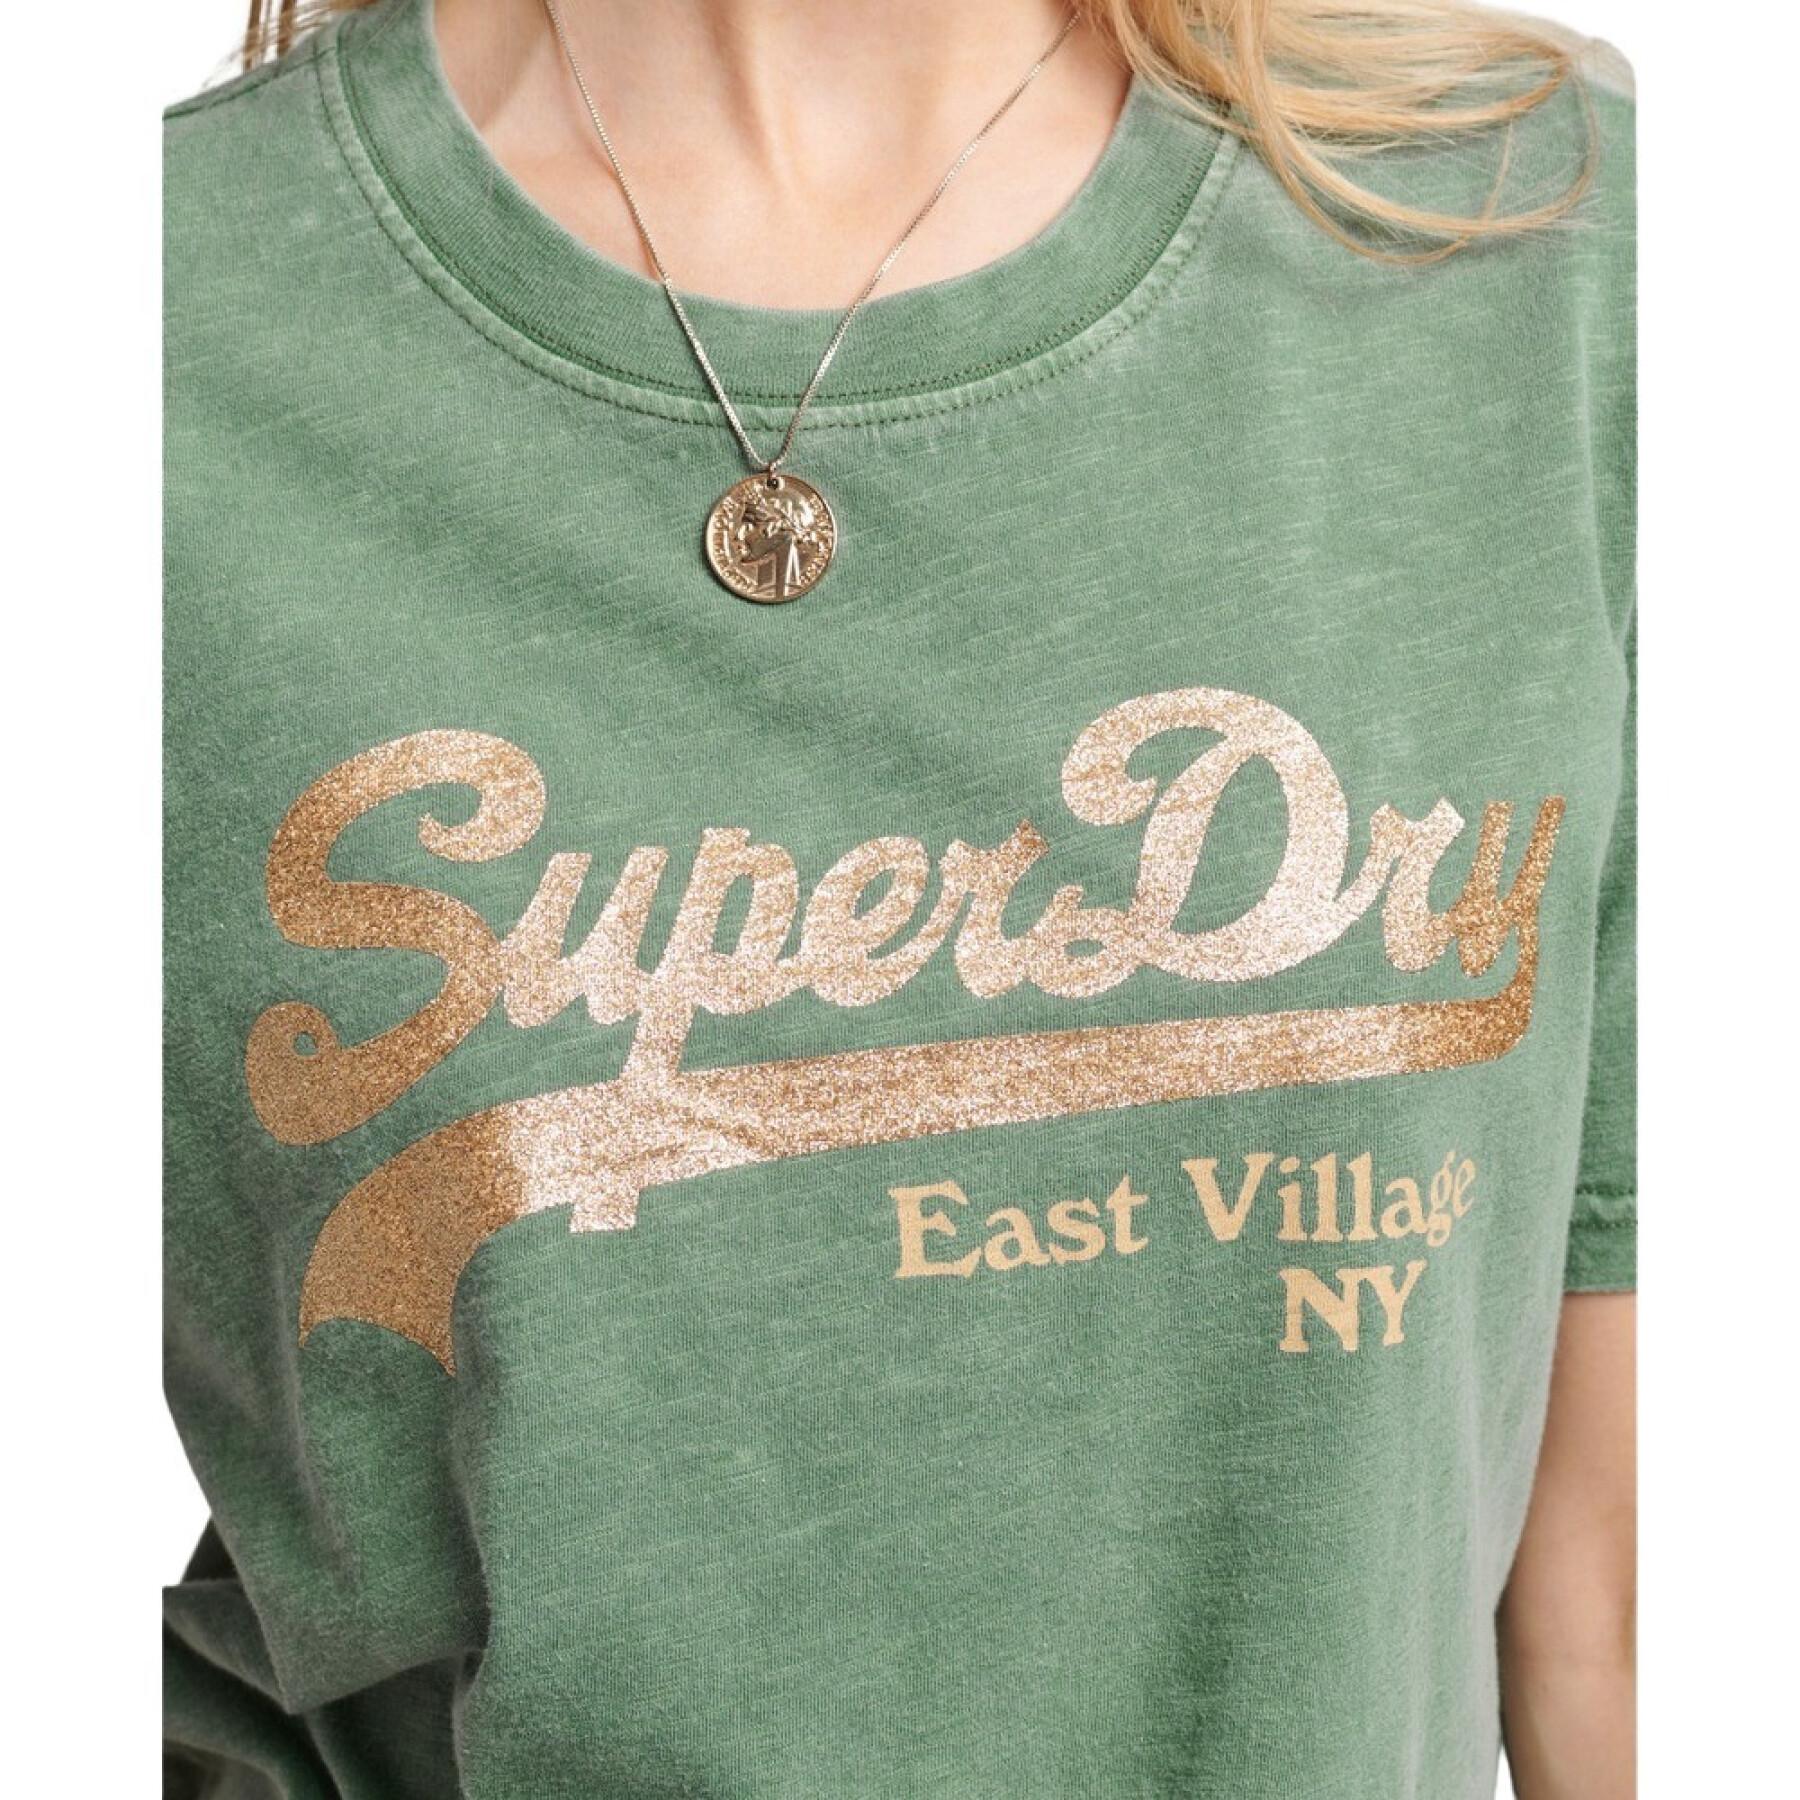 Women's T-shirt Superdry Vintage Logo Borough